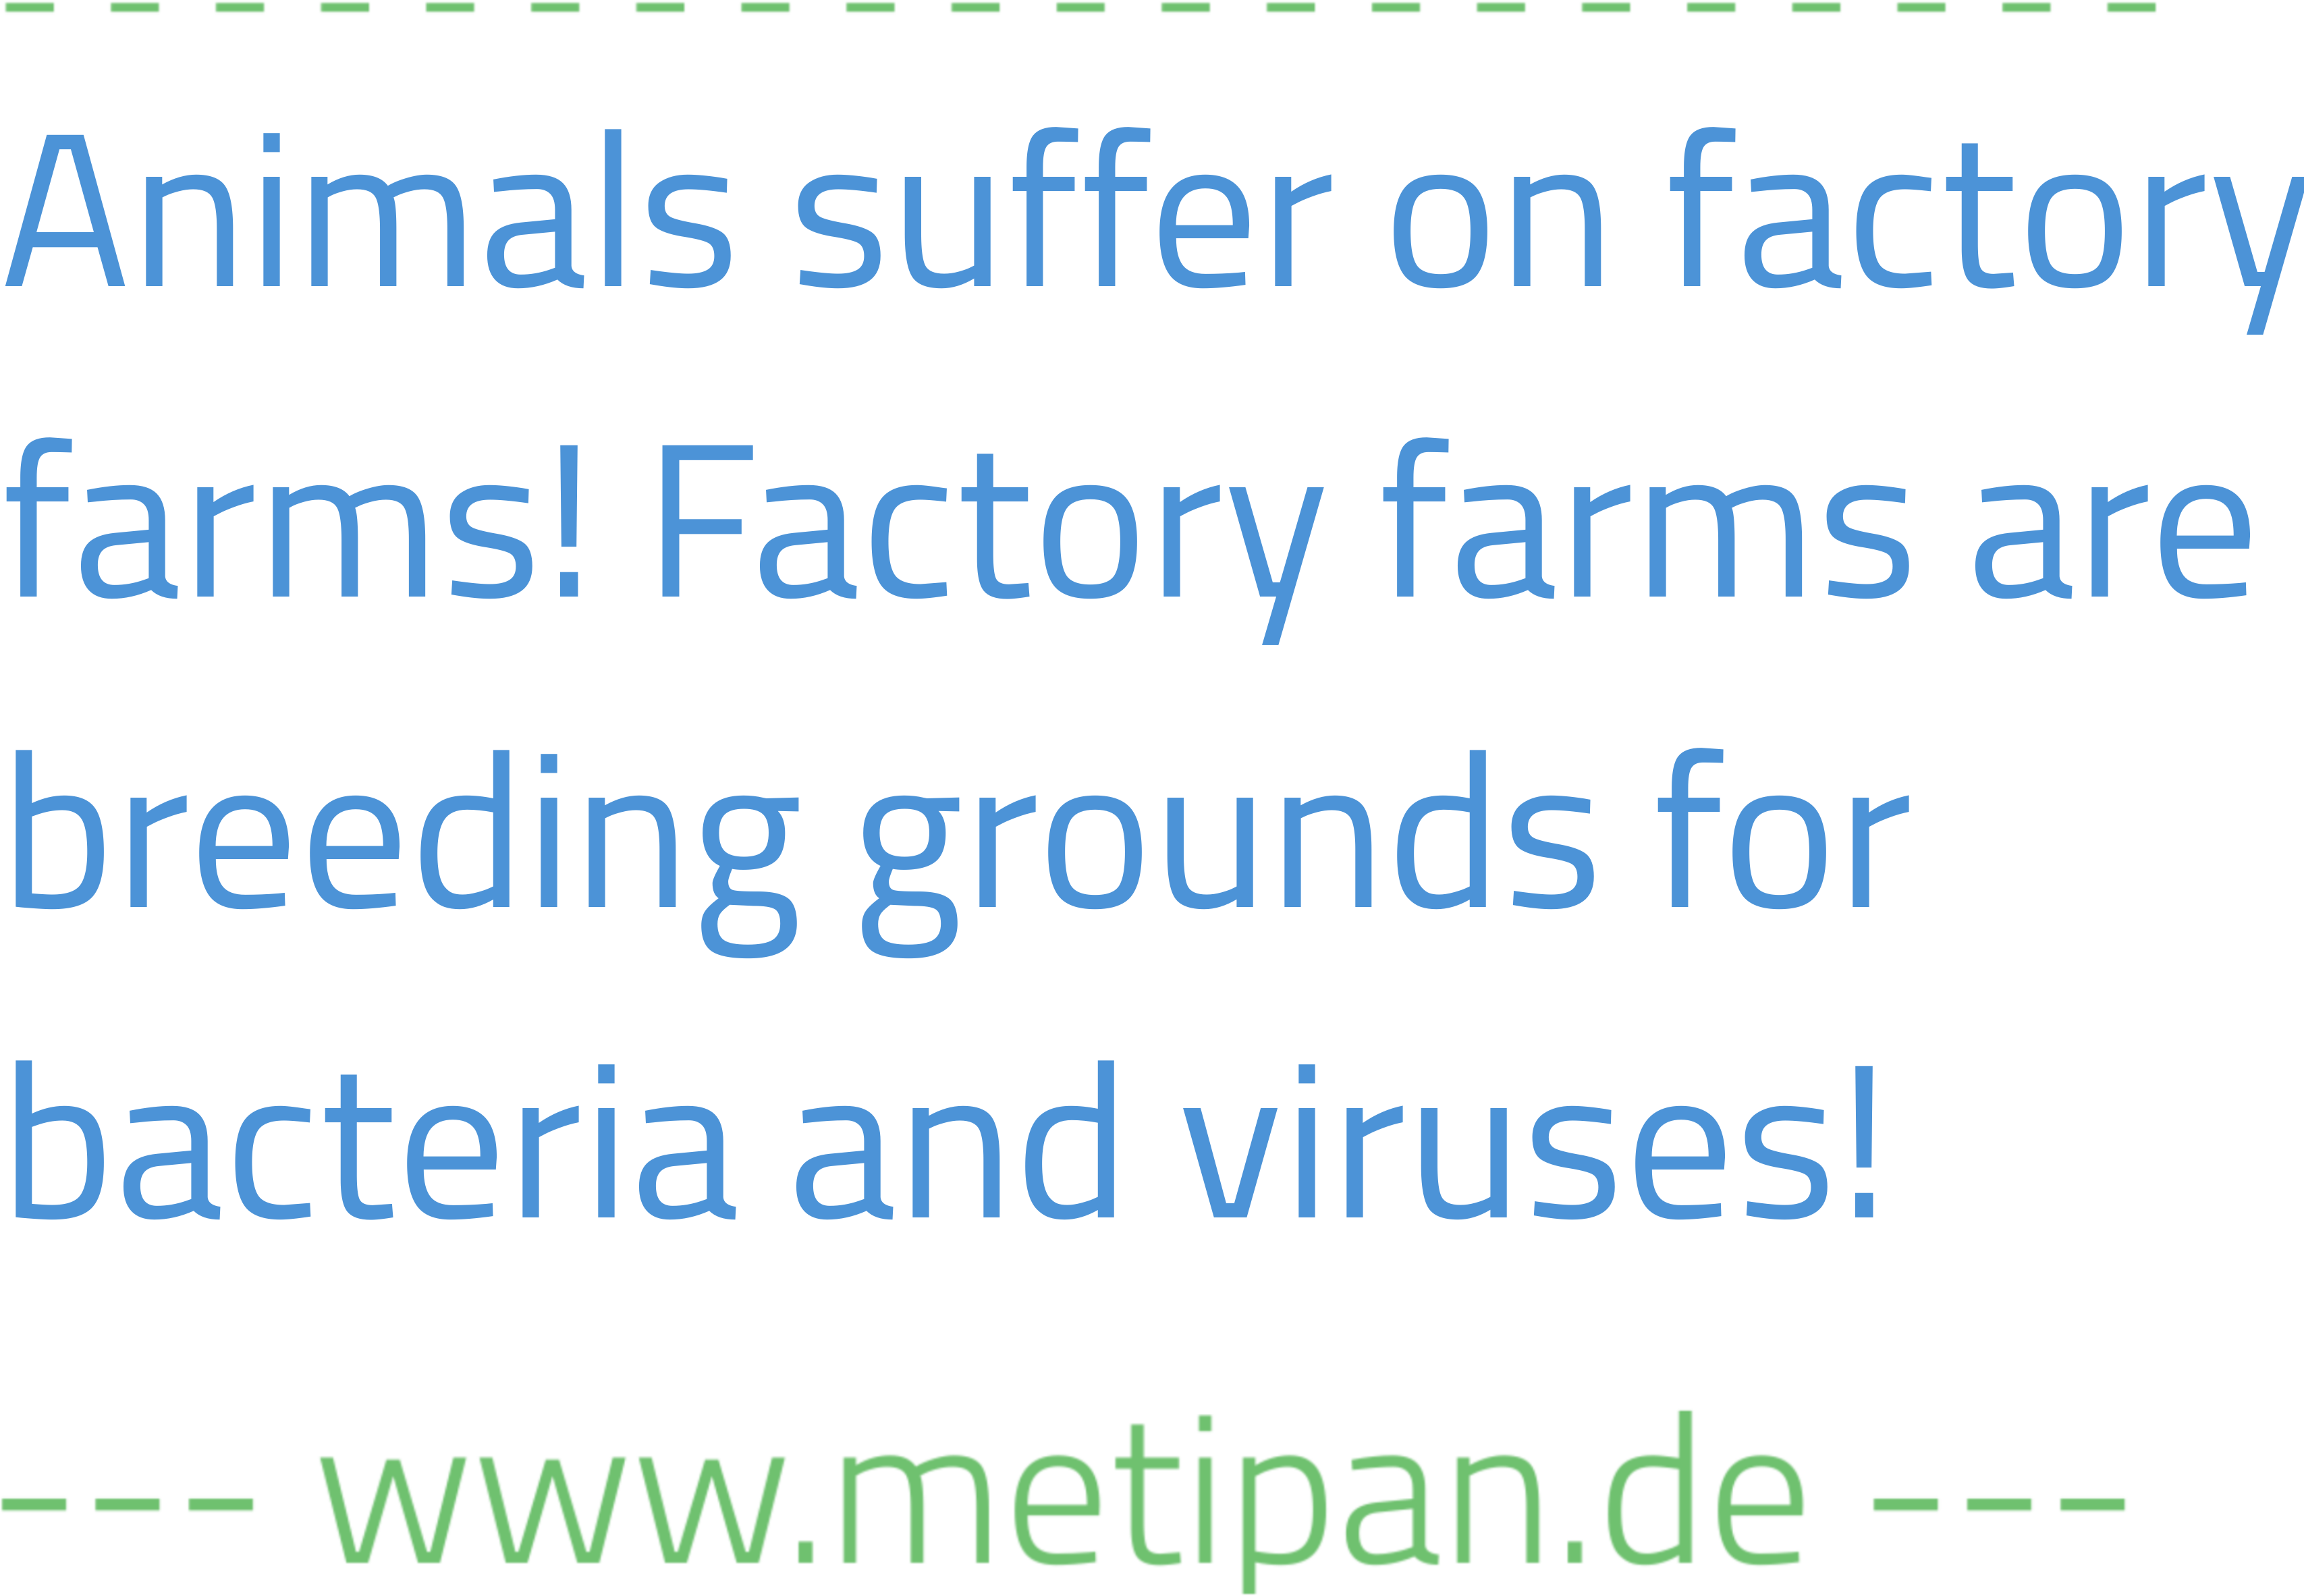 Blaue Schrift auf weißem HIntergrund: "Animals suffer on factory farms! Factory famrs are breeding grounds for bacteria and viruses!" Darunter in grüner Schrift: "www.metipan.de"